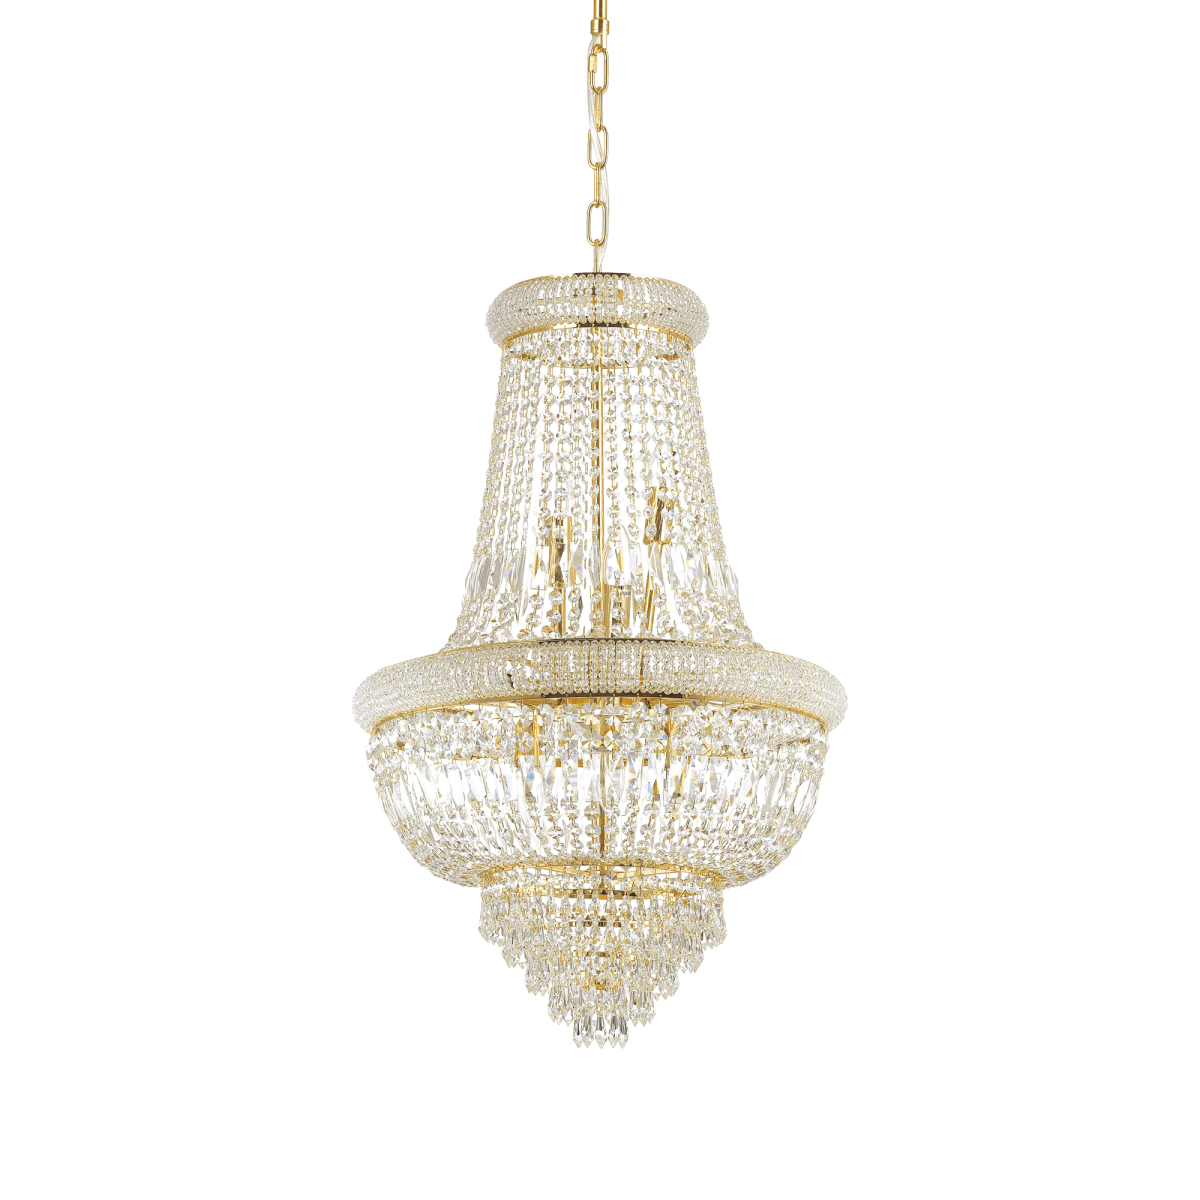 Ideal Lux Lighting Chandeliers 24 flames (SP24) / Brass Dubai Crystal Chandelier